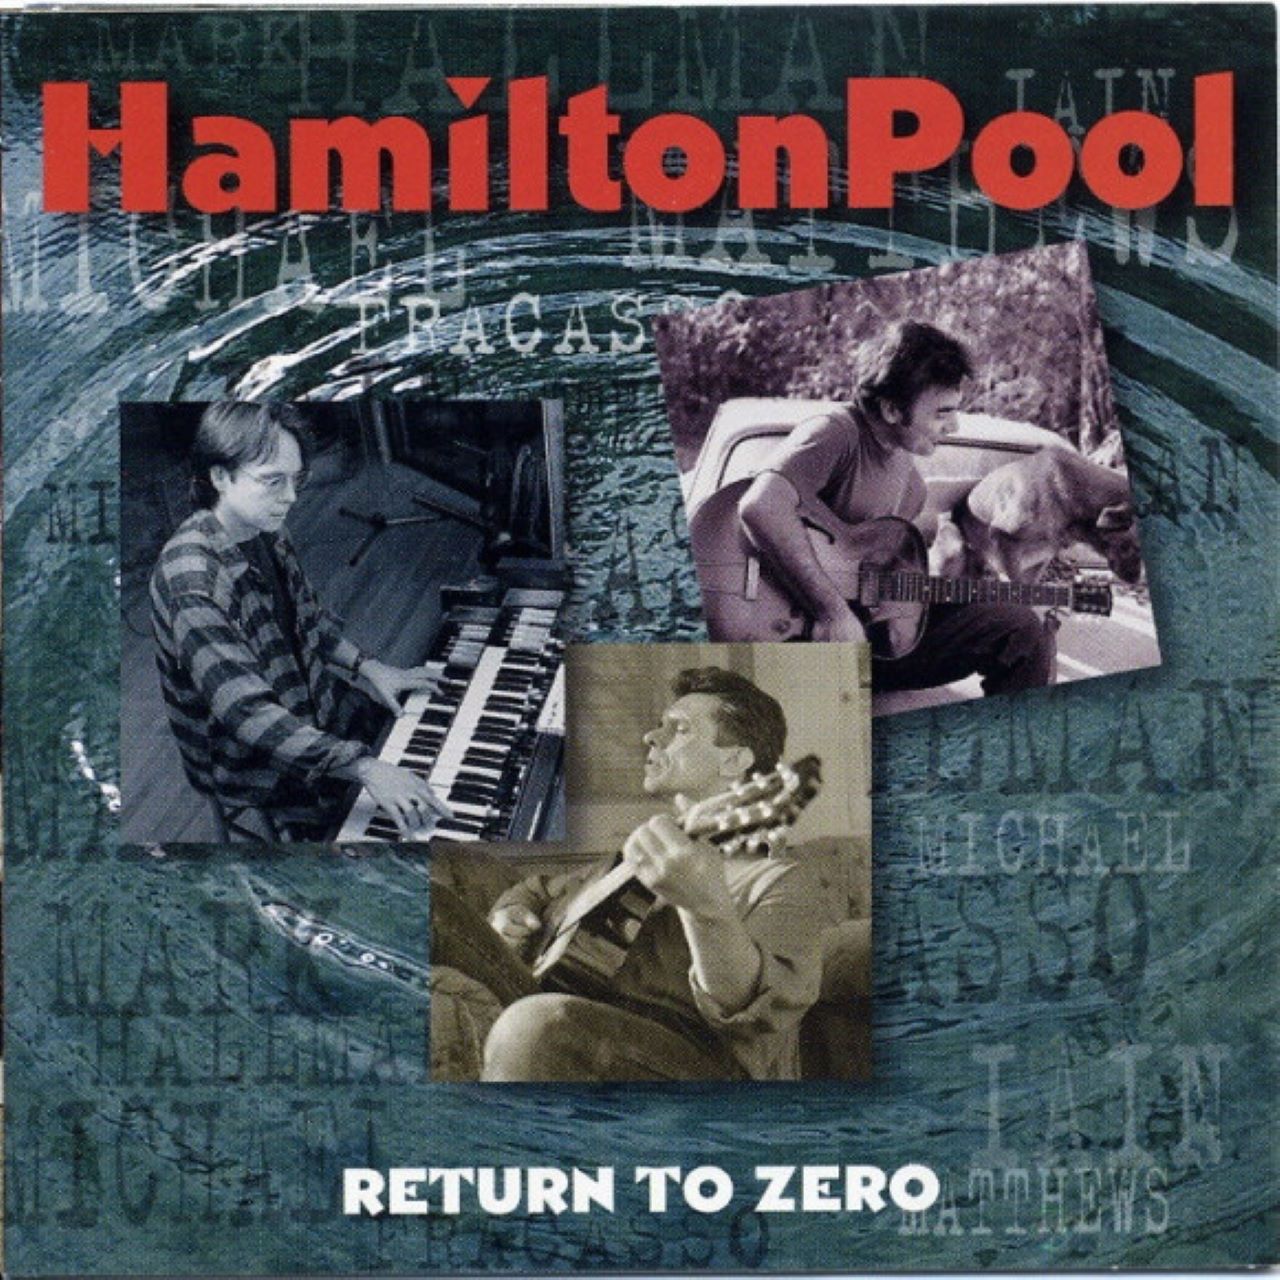 Hamilton Pool - Return To Zero cover album